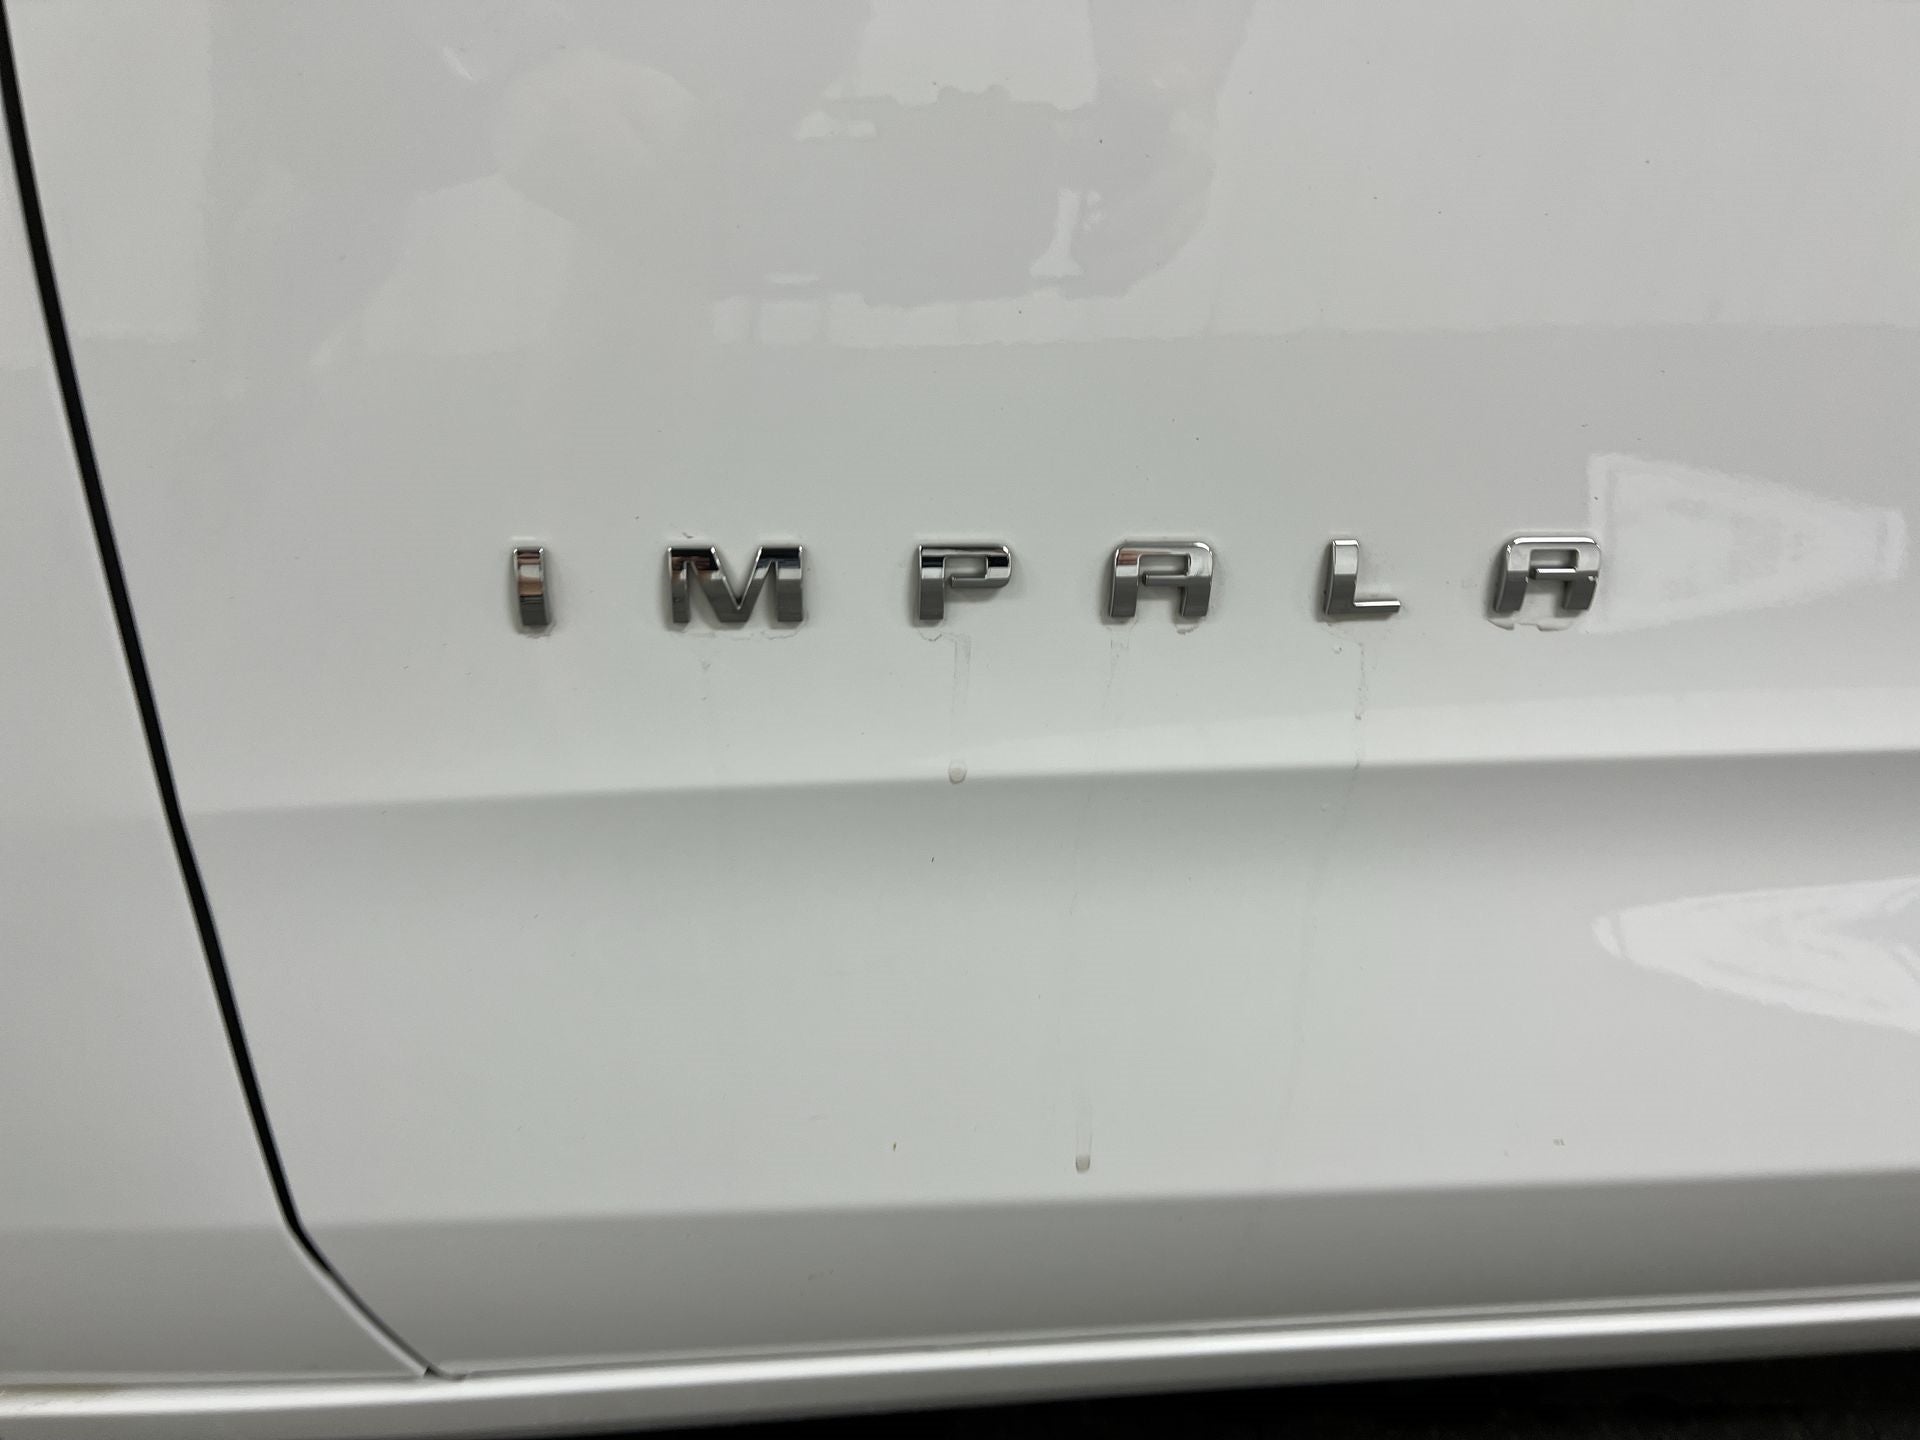 2018 Chevrolet Impala LS